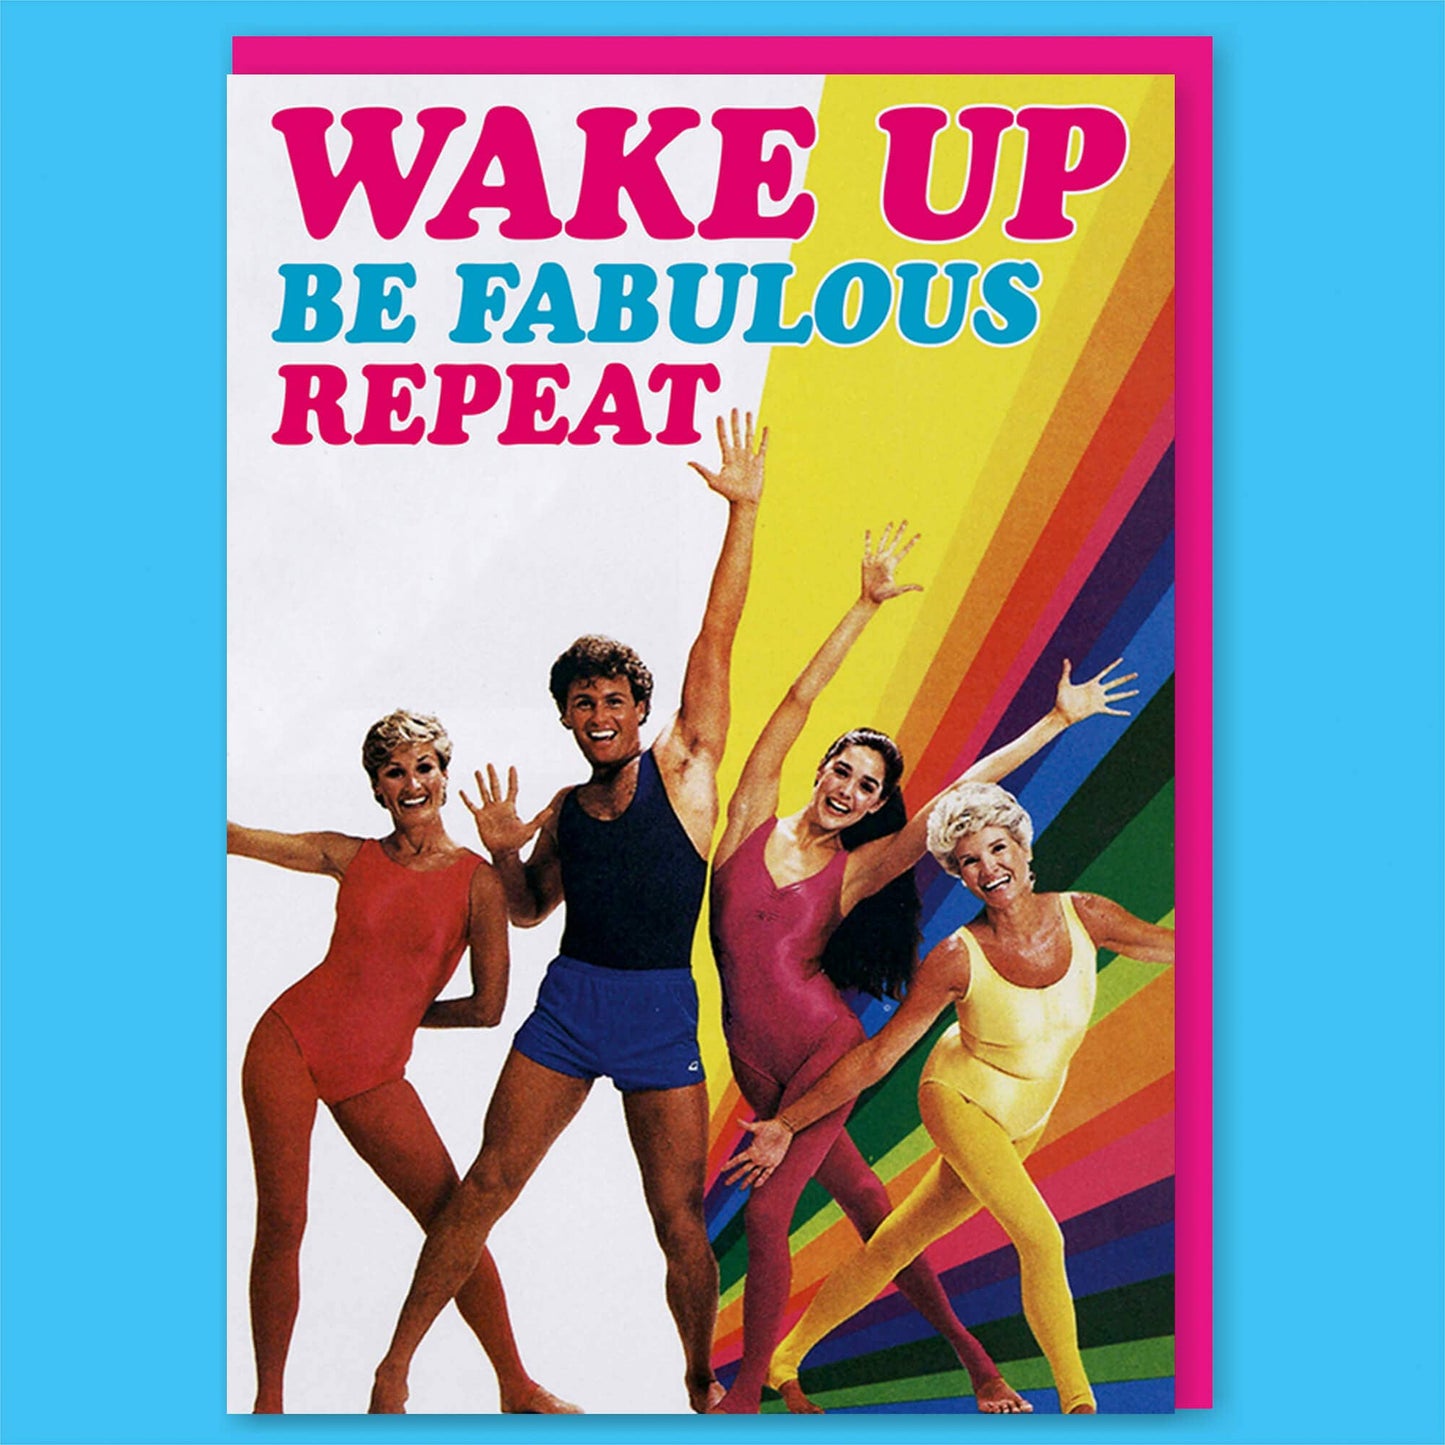 Dean Morris Cards - Wake Up Be Fabulous Repeat Greeting Cards